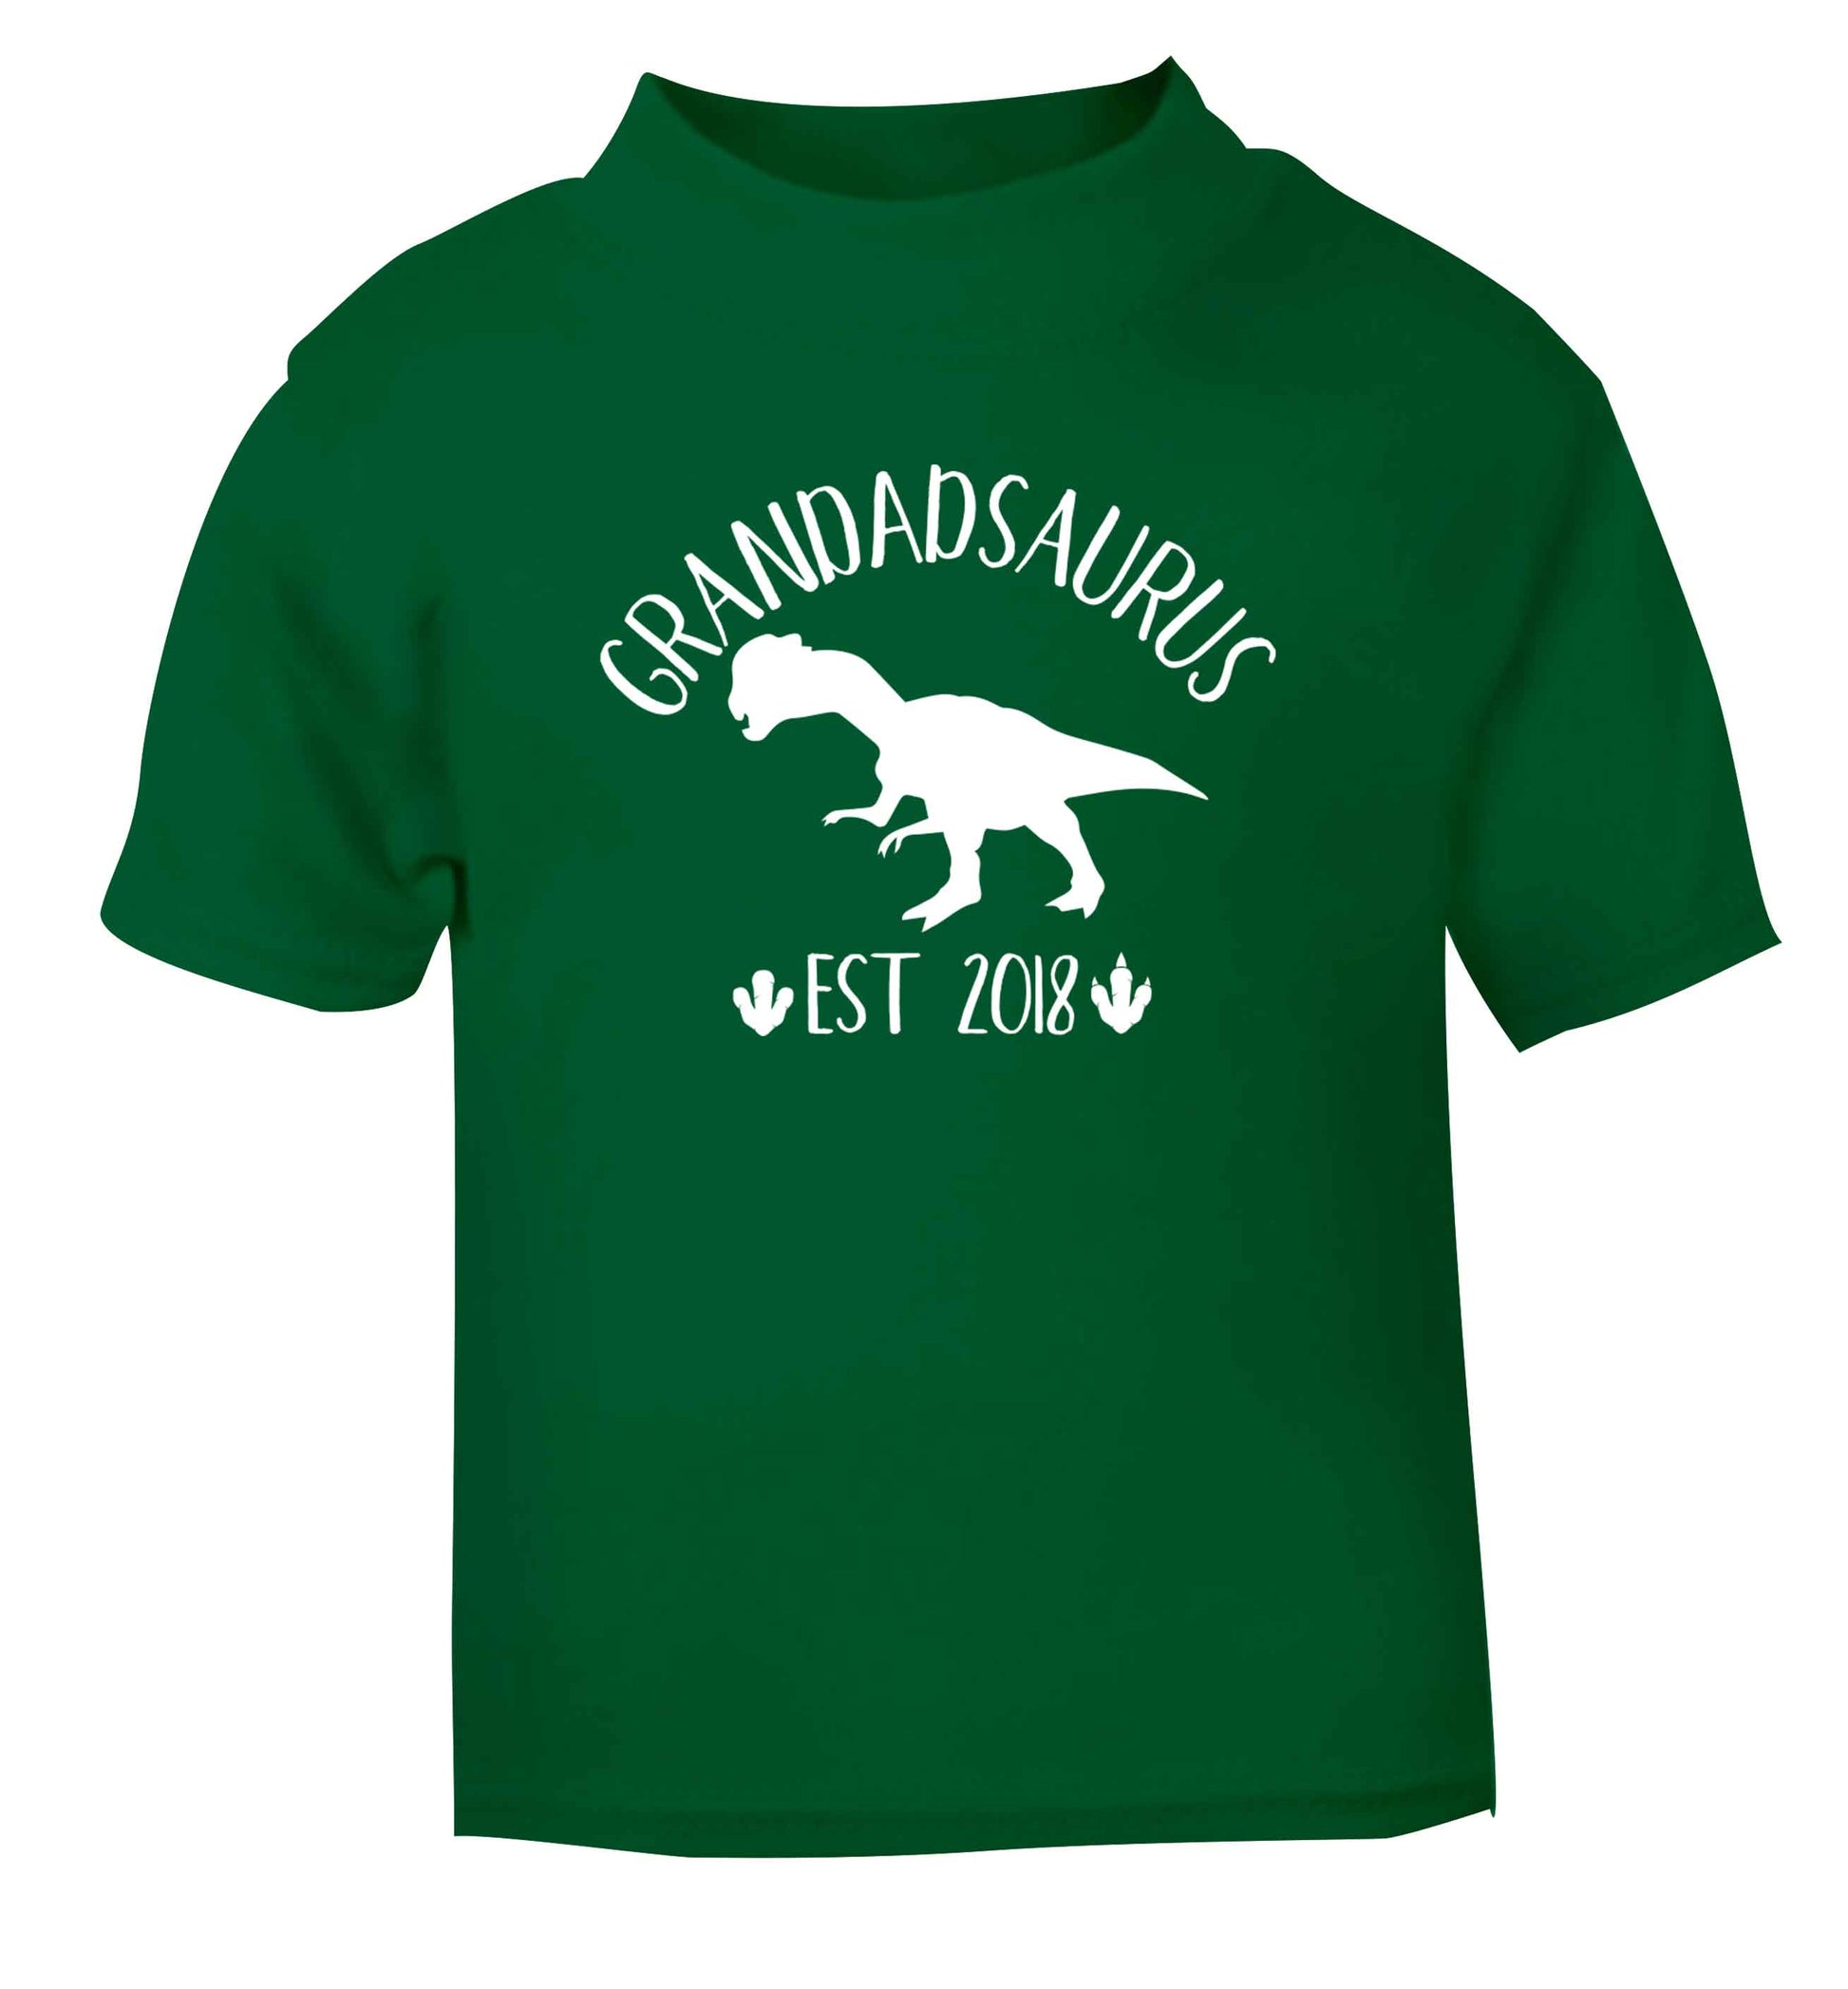 Personalised grandadsaurus since (custom date) green Baby Toddler Tshirt 2 Years